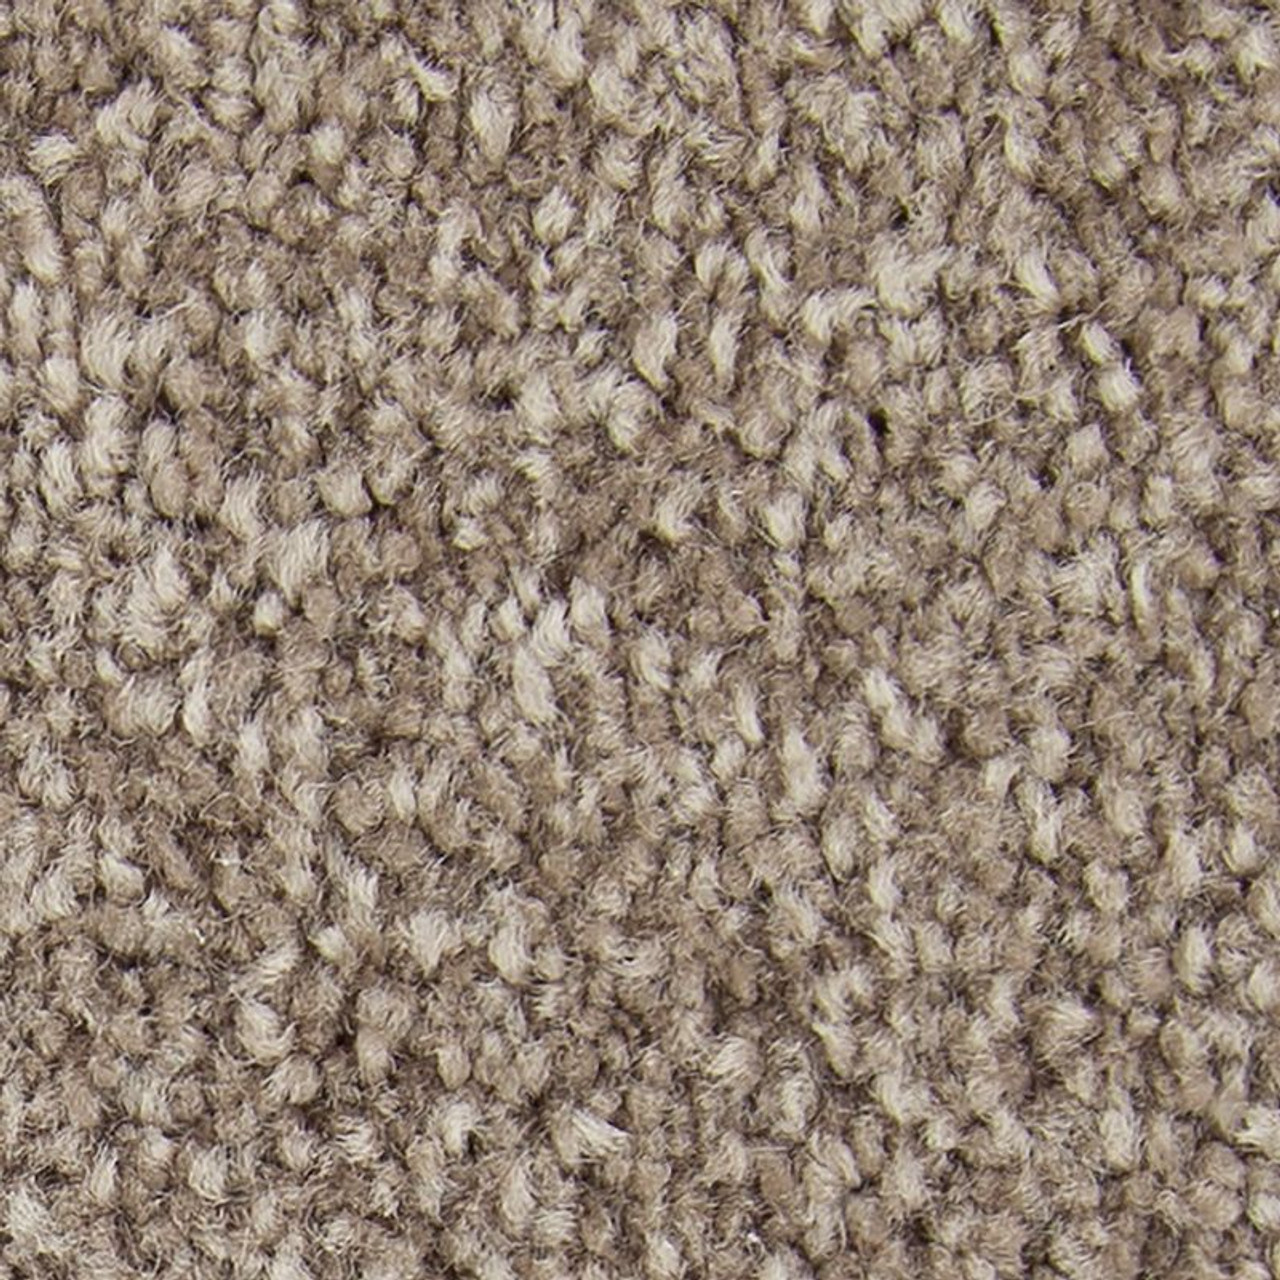 Soft Embrace Triexta Carpet - Godfrey Hirst Residential Carpet